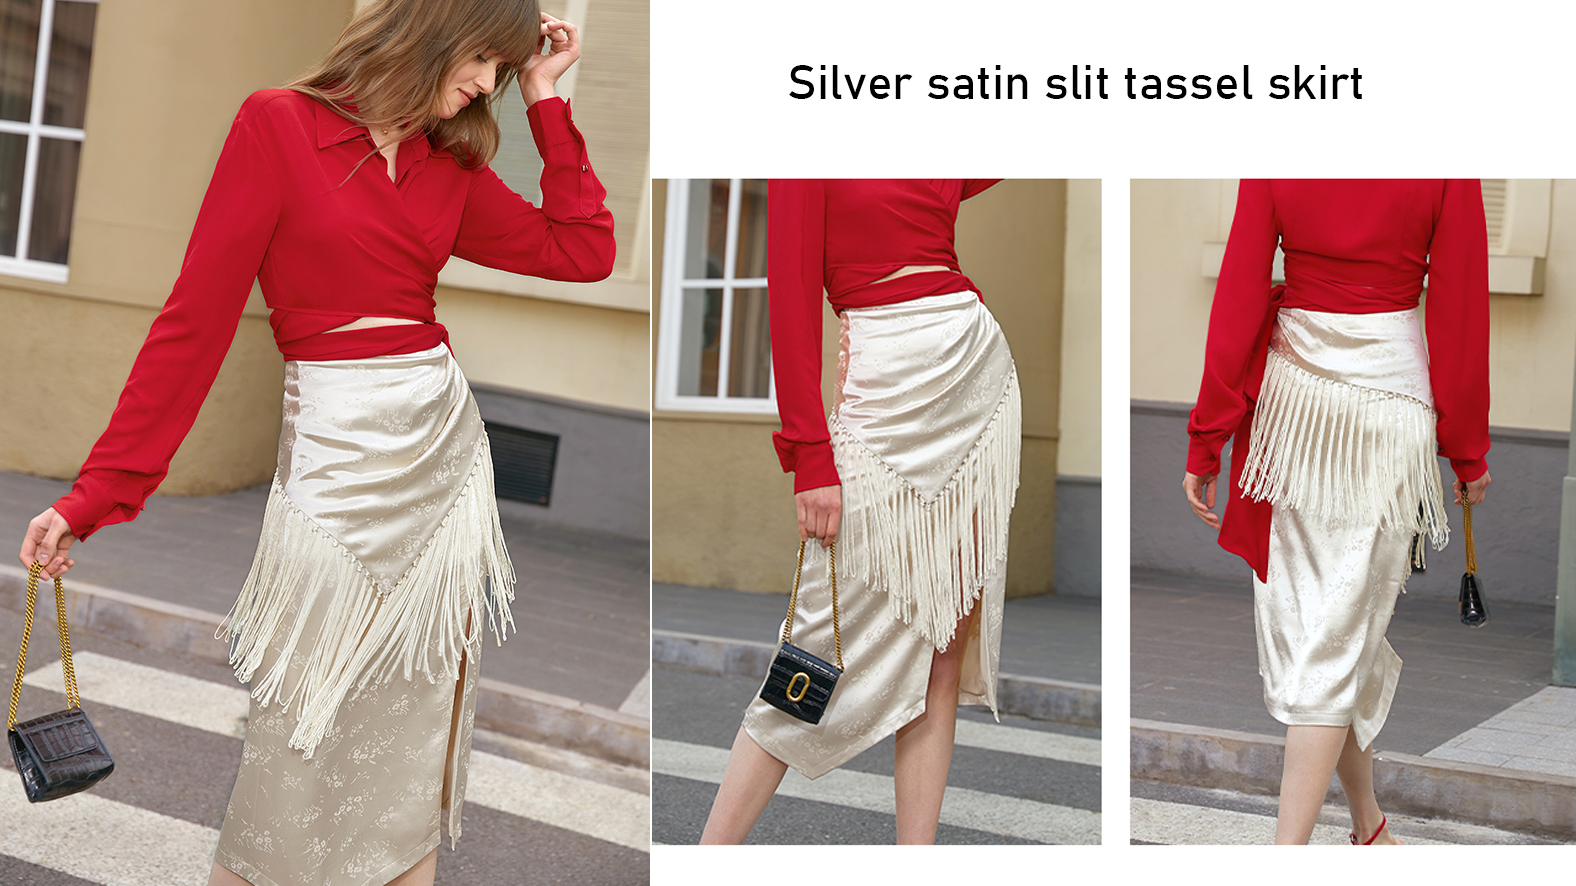 Best Silver satin slit tassel skirt Company - Auschalink